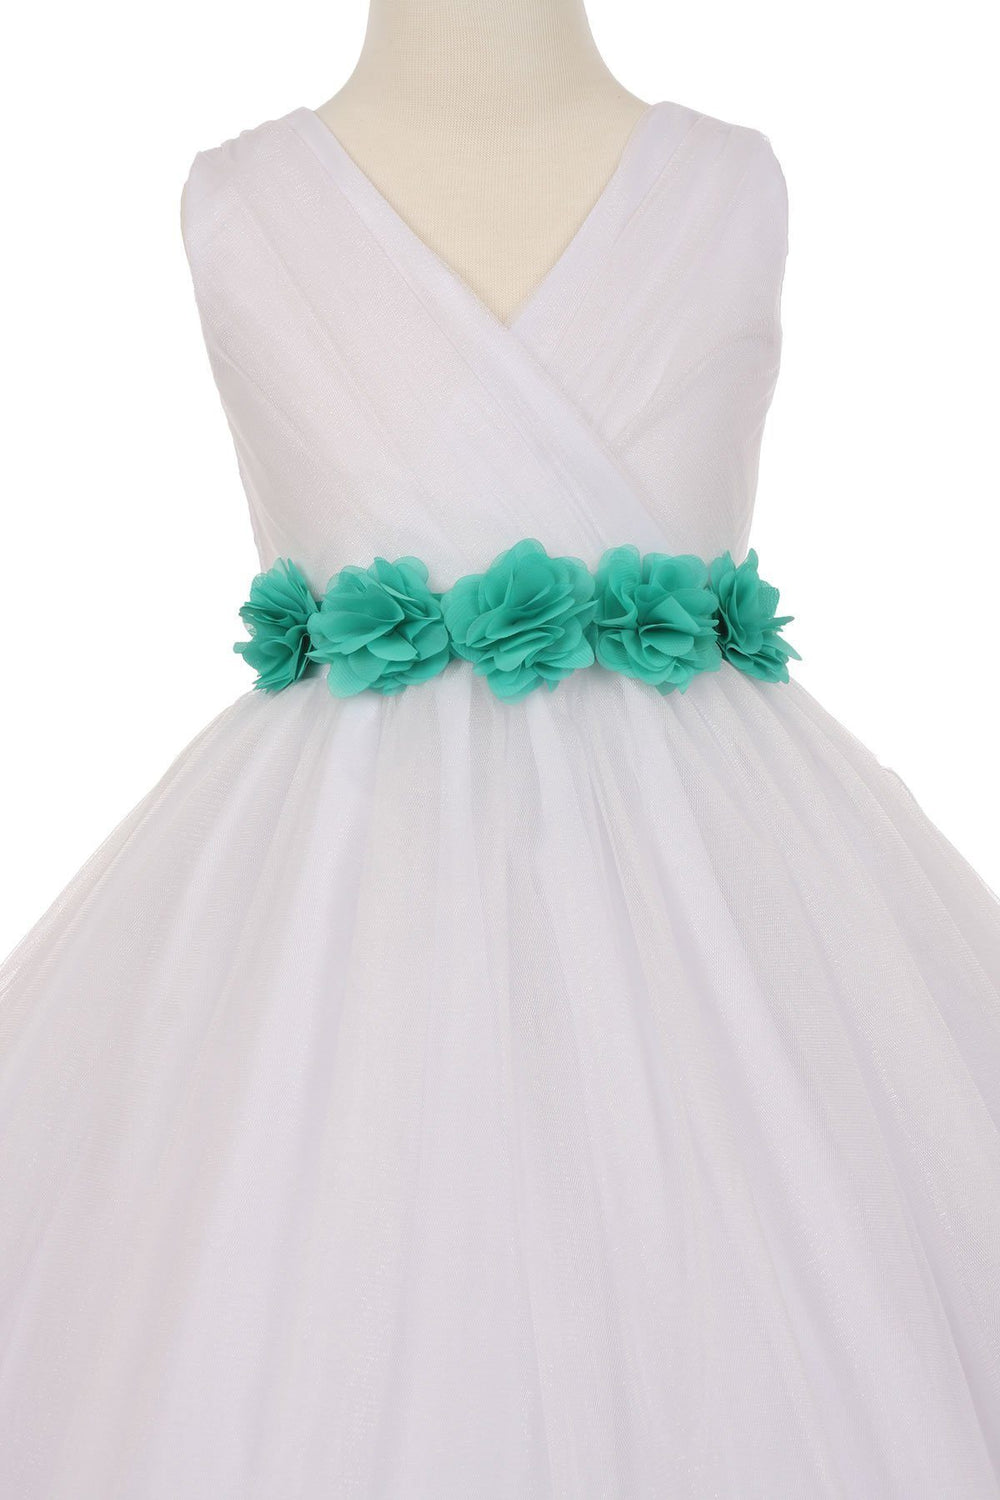 Girls Pleated White Tea Length Tulle Dress with Flower Sash-Girls Formal Dresses-ABC Fashion